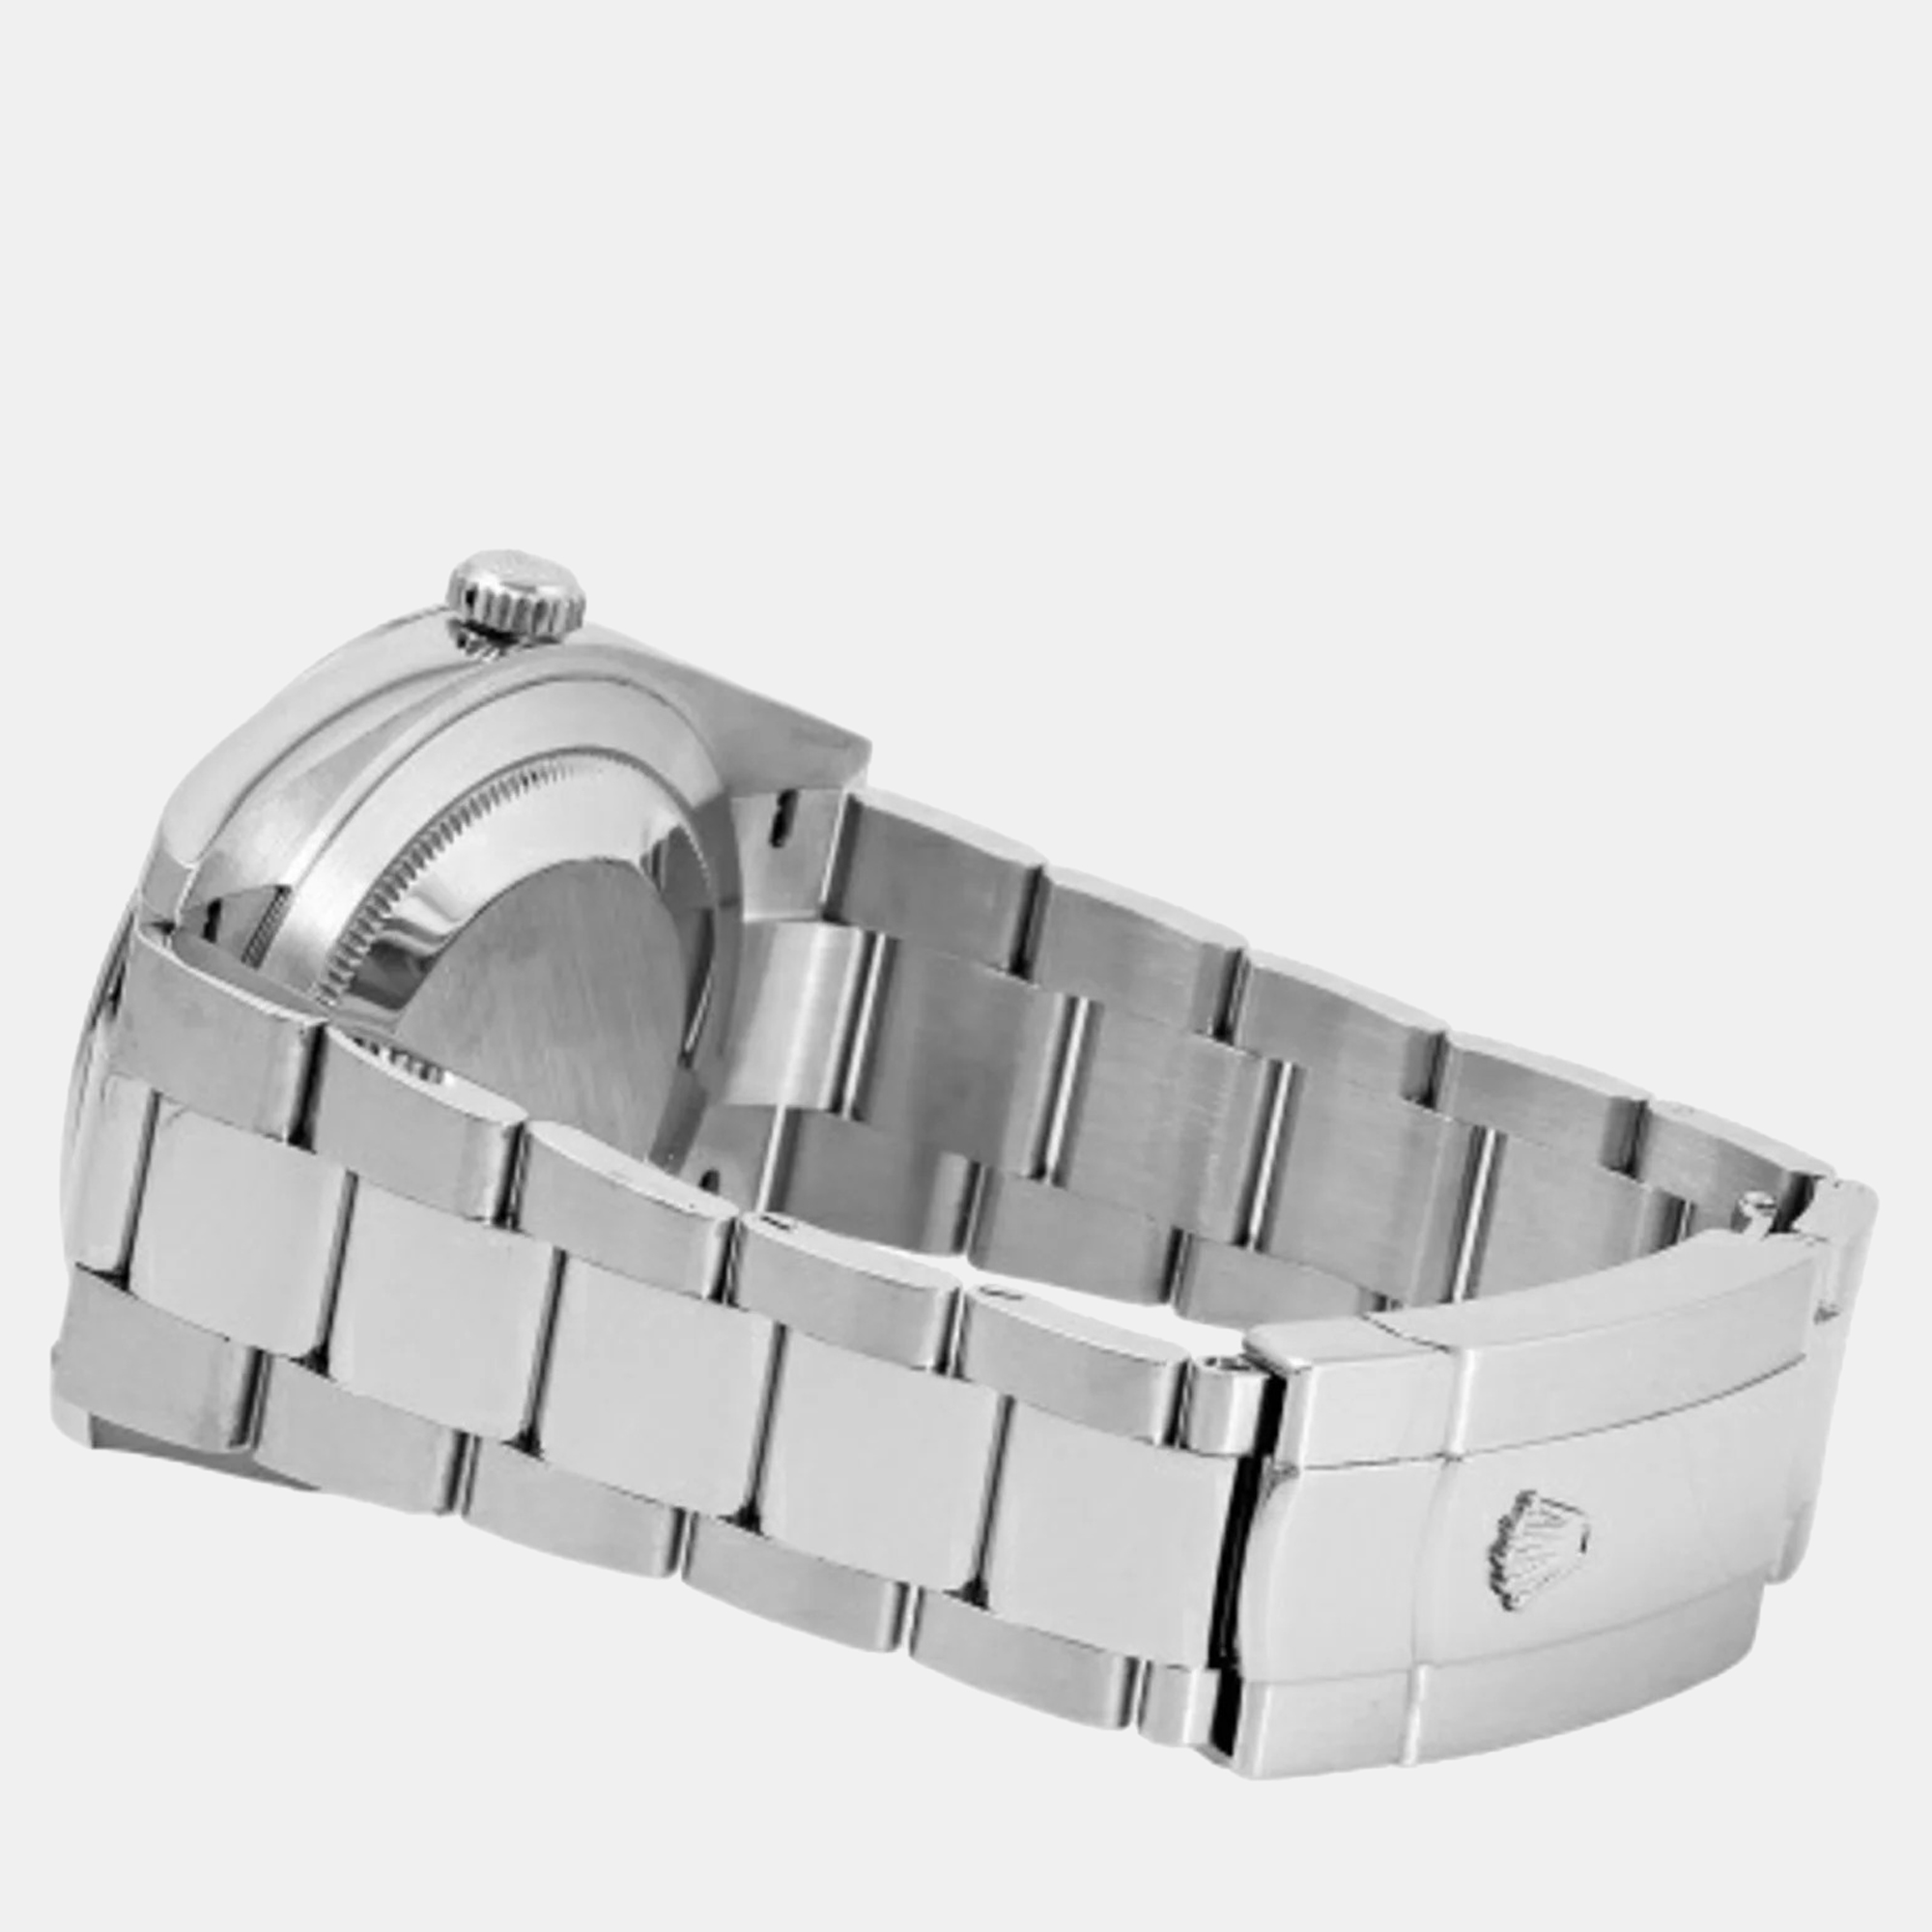 Rolex Blue Stainless Steel Datejust 126300 Automatic Men's Wristwatch 41 Mm